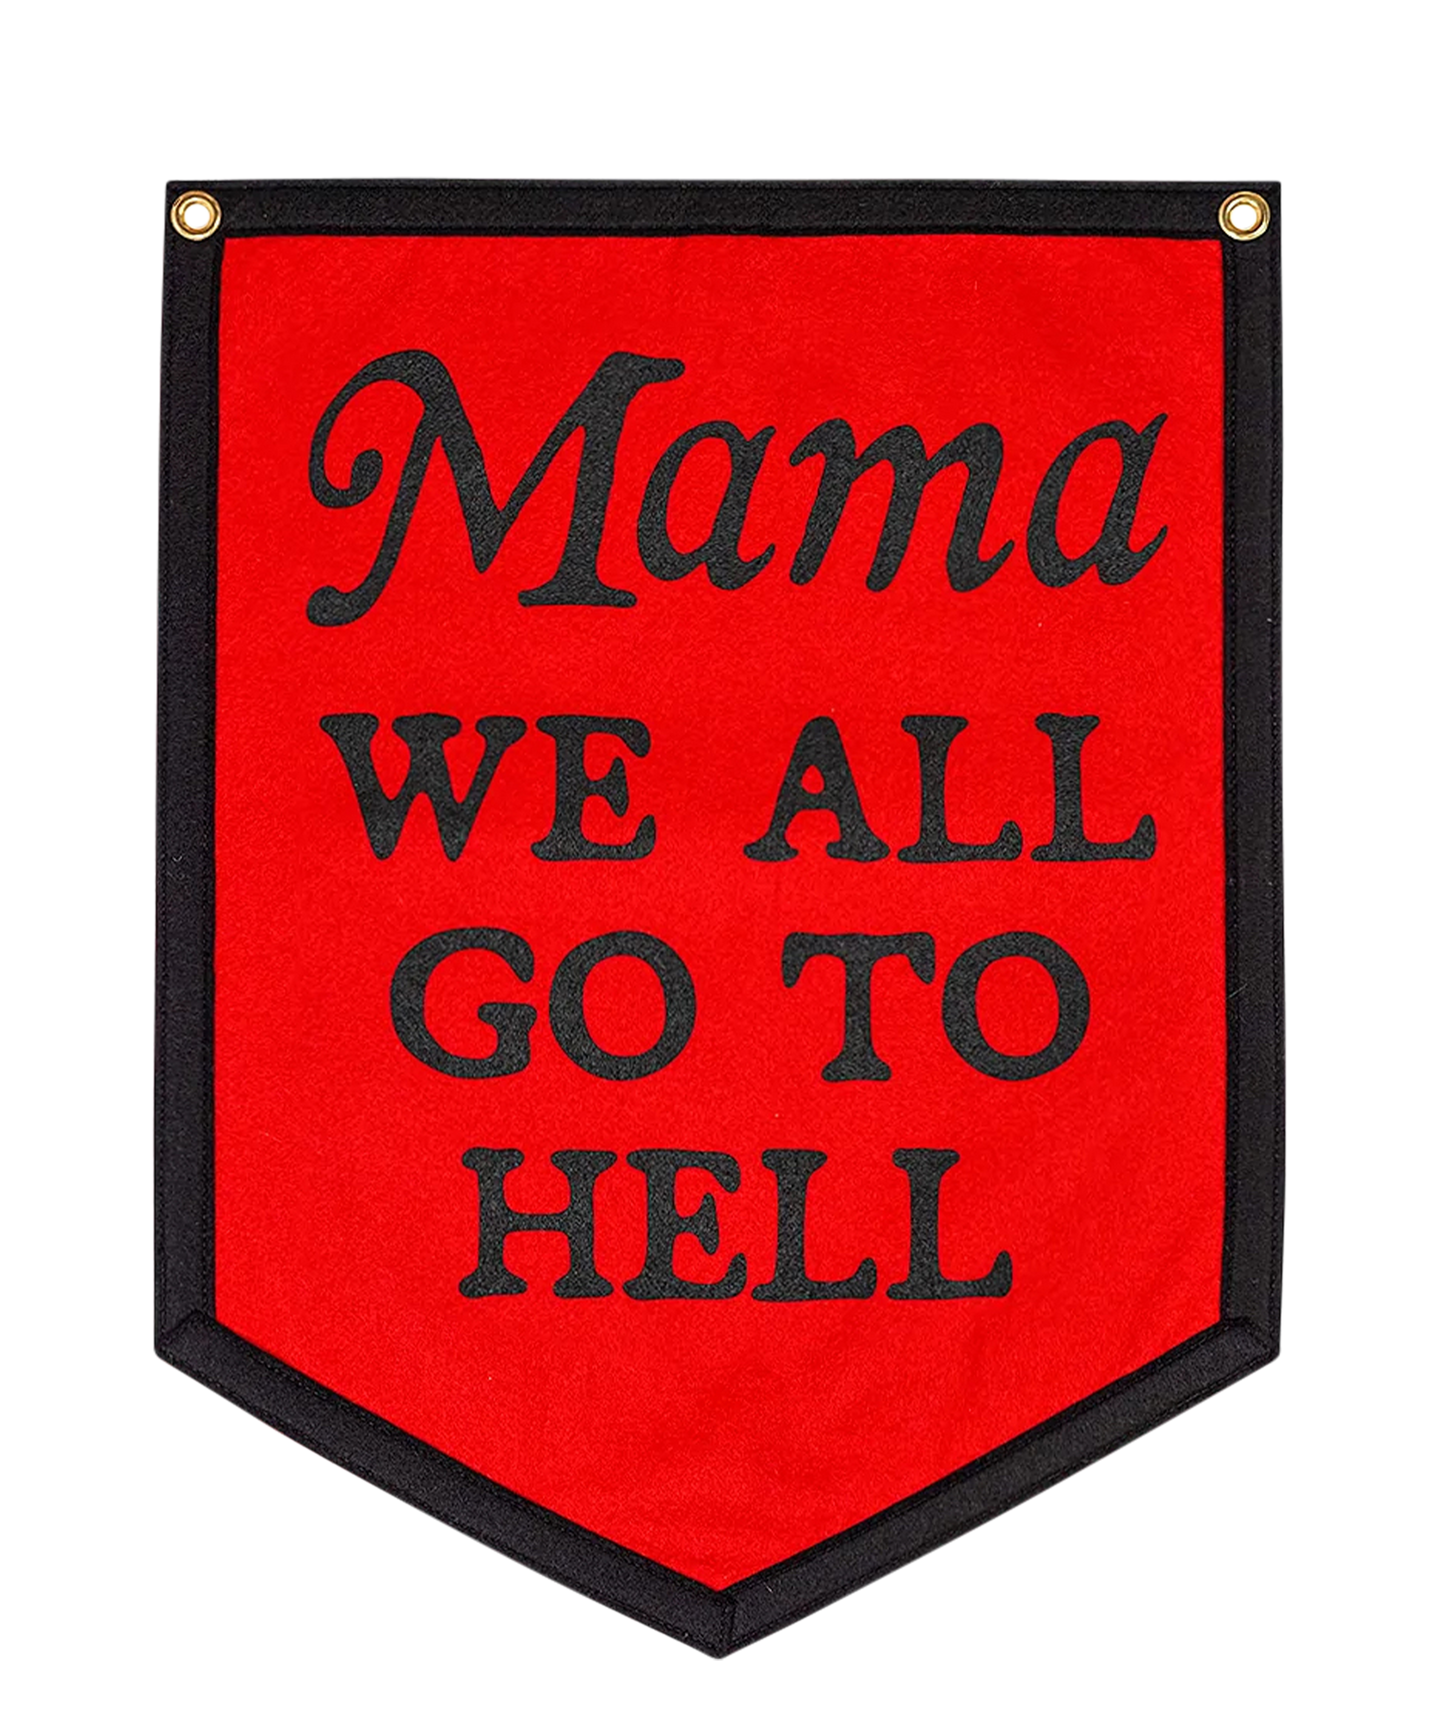 Mama We All Go To Hell Camp Flag - MCR x Oxford Pennant